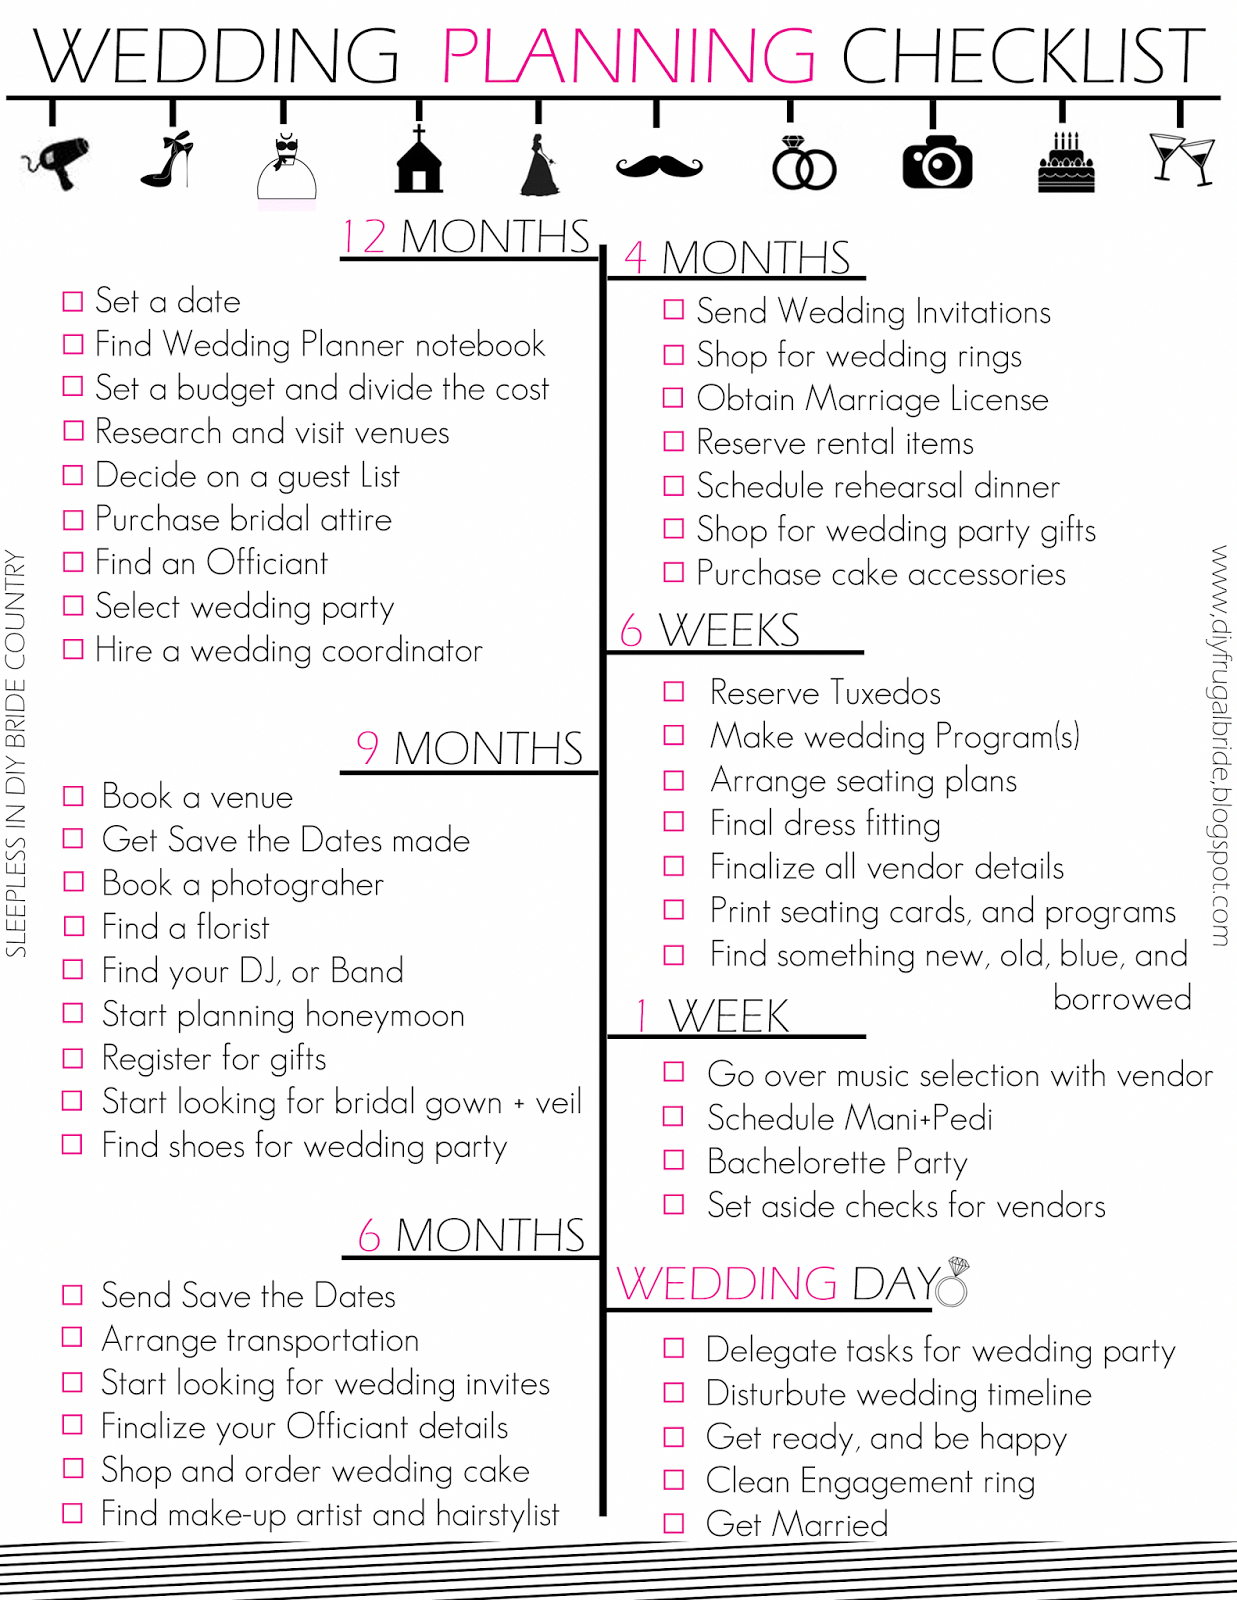 Budget Bride Wedding Checklist And Budget Tips | Wedding In 2019 - Free Printable Wedding Checklist